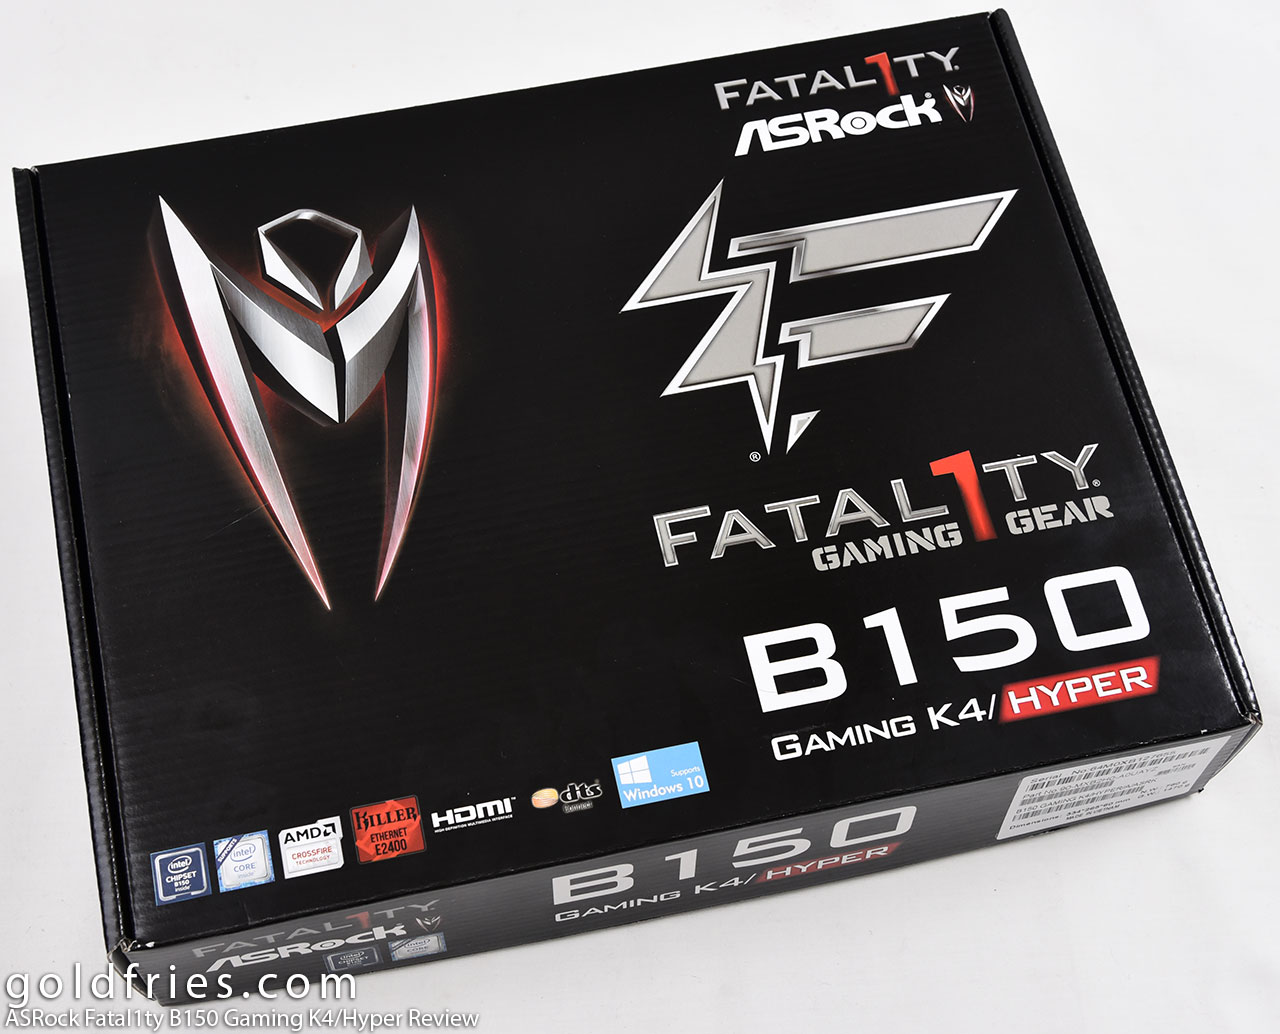 ASRock Fatal1ty B150 Gaming K4/Hyper Motherboard Review